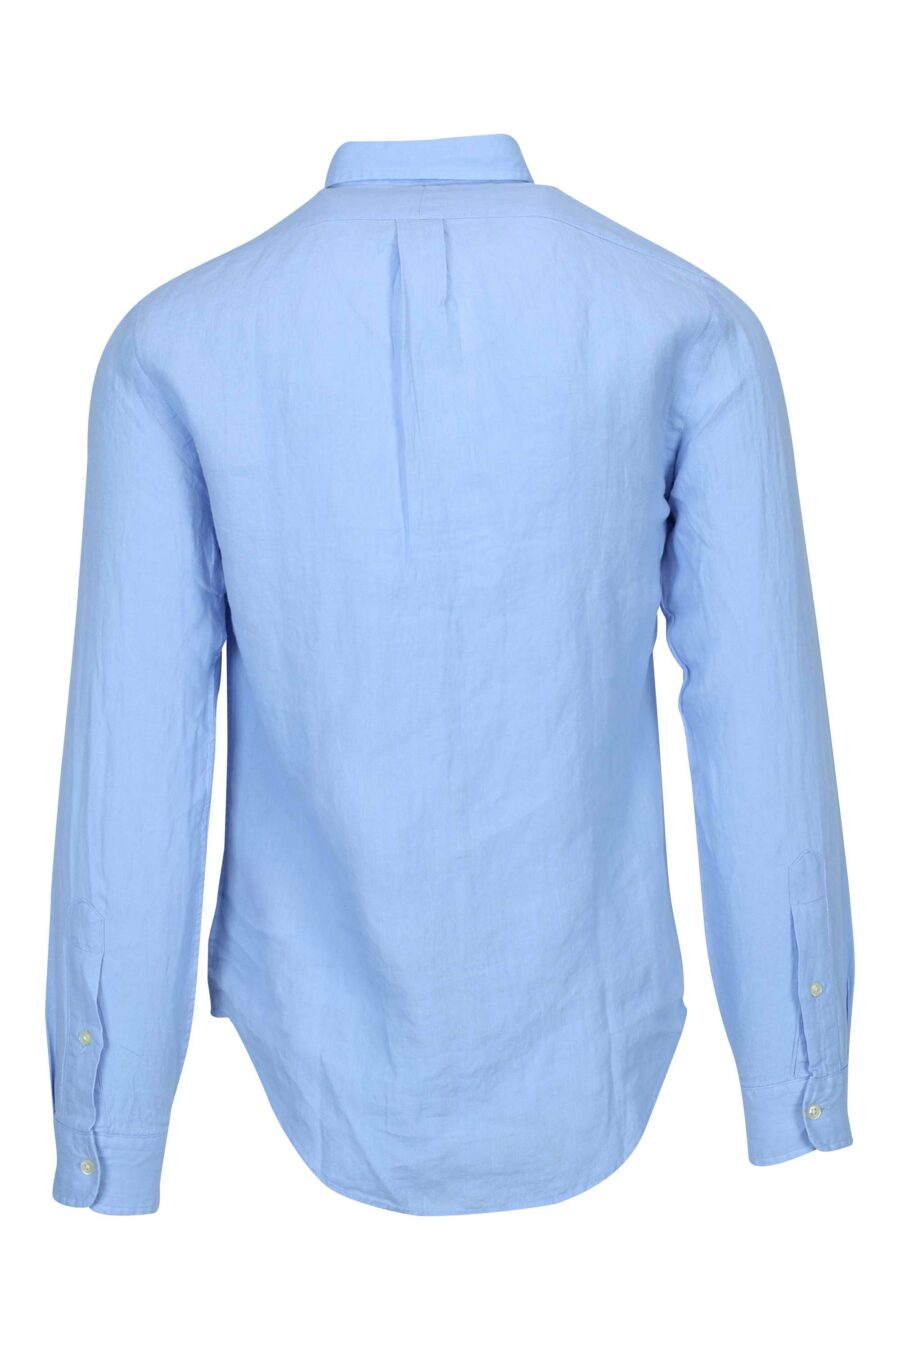 Blue shirt with mini-logo "polo" - 3616535910850 1